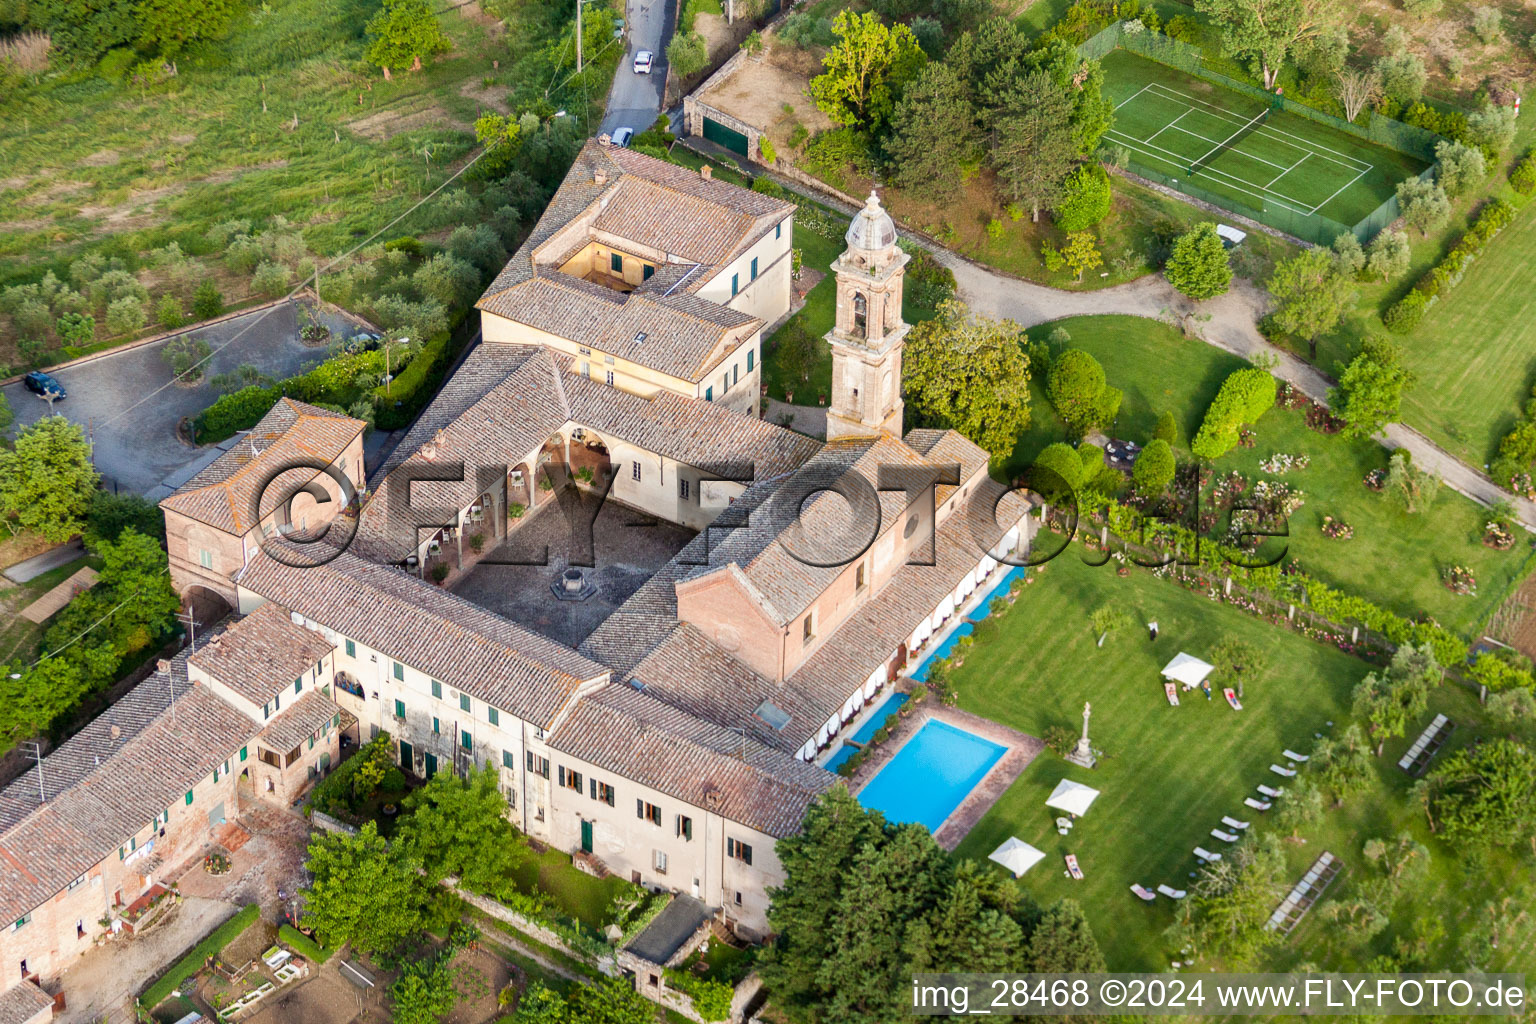 Gebäudekomplex der Hotelanlage Certosa di Maggiano in Siena in Toskana im Bundesland Toscana, Italien